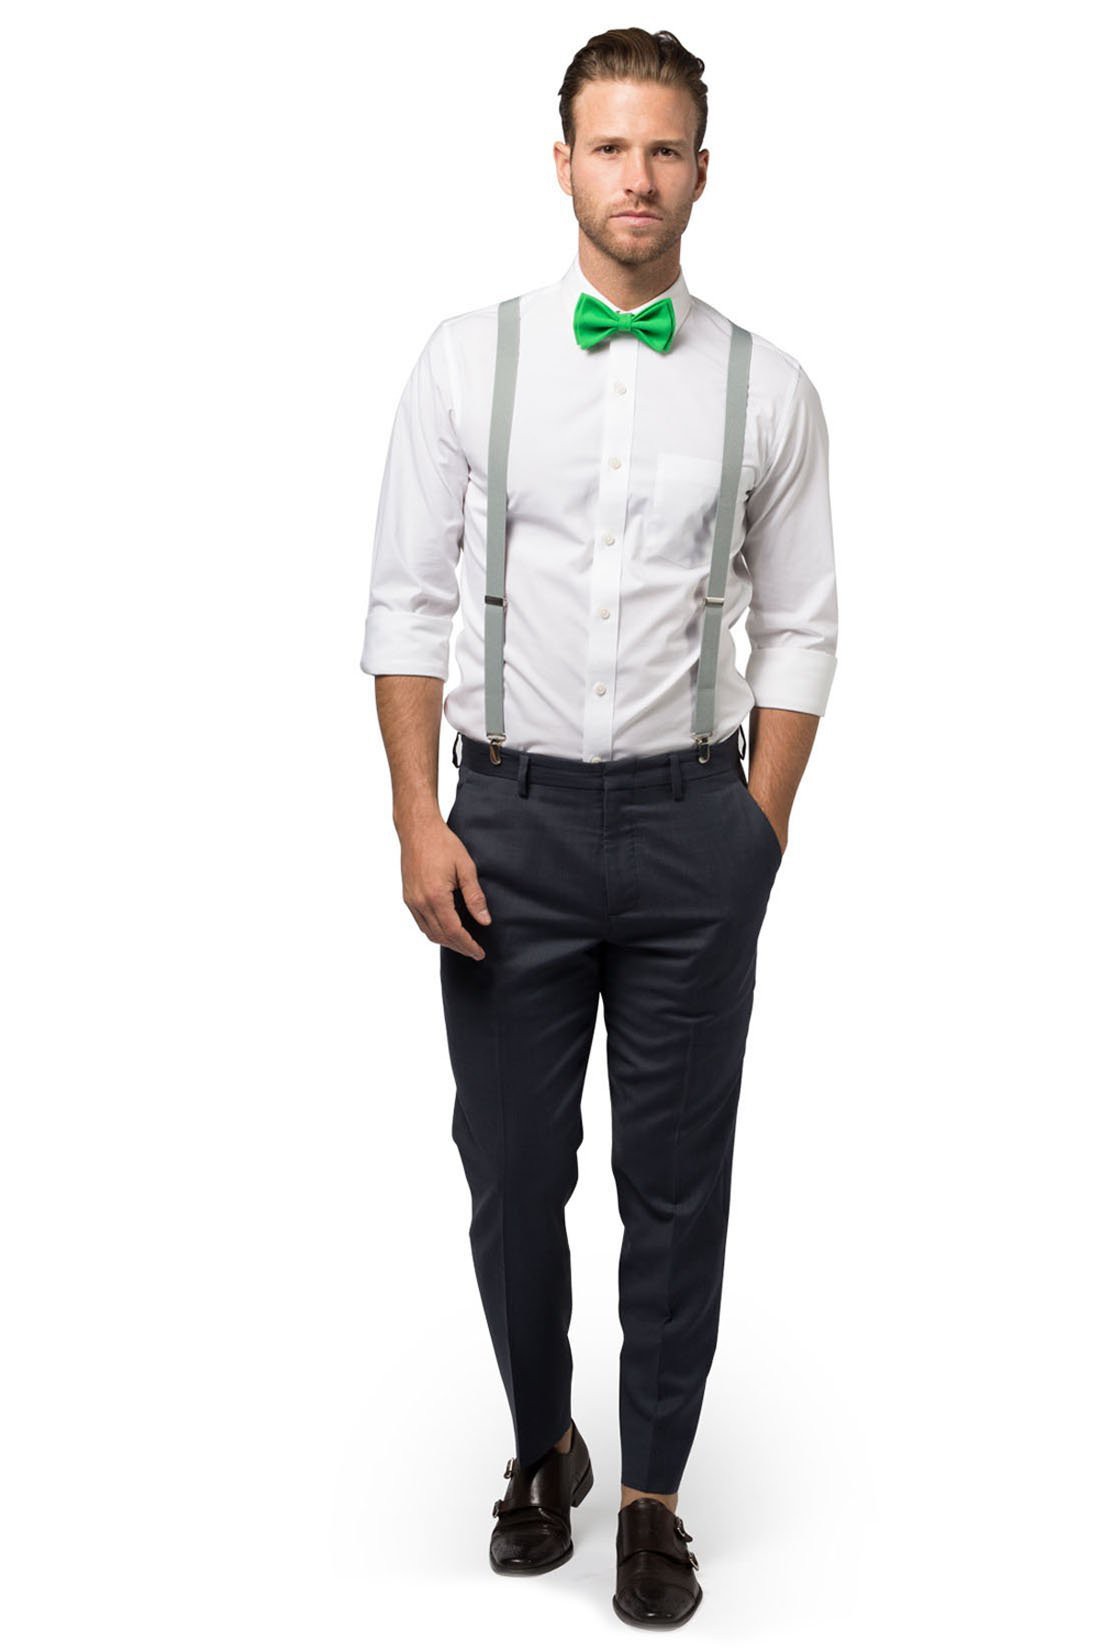 Light Gray Suspenders & Green Bow Tie